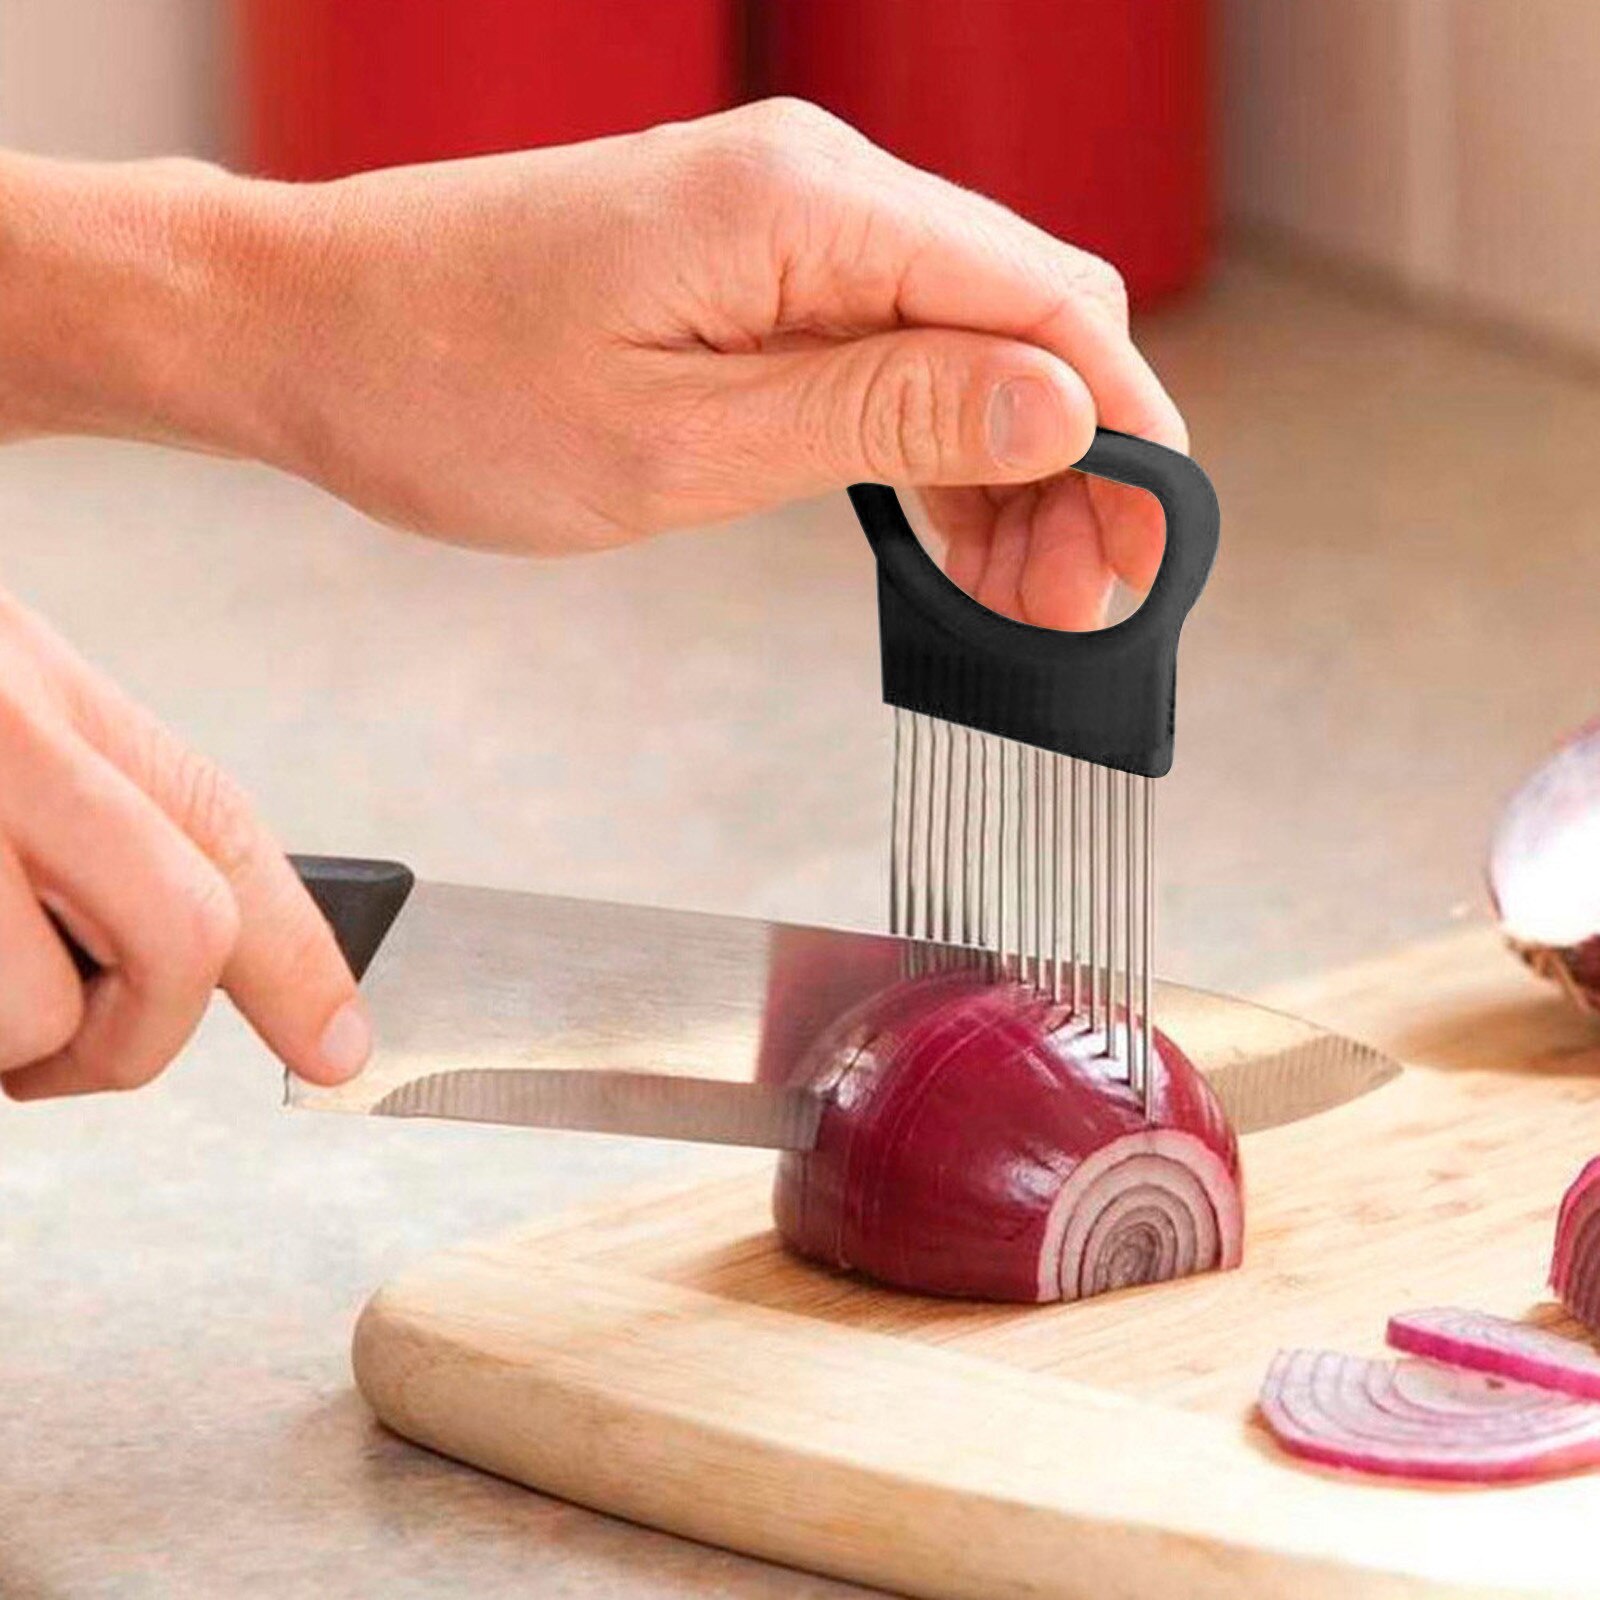 Shrendders & Snijmachines Tomaat Ui Groenten Slicer Snijden Aid Houder Gids Snijden Cutter Veilig Vork